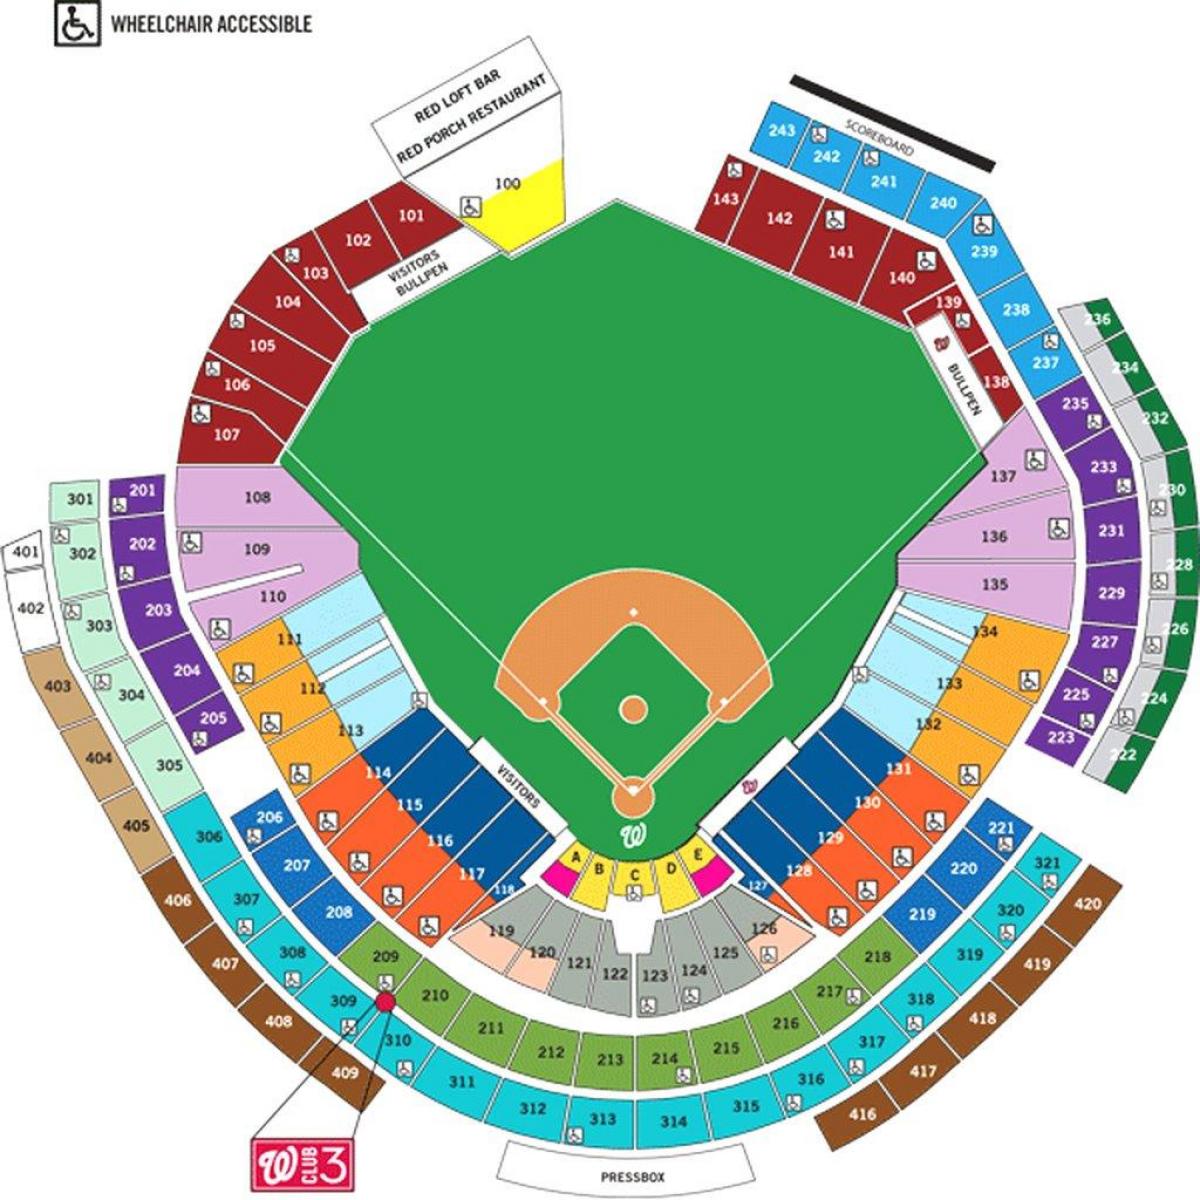 वाशिंगटन नागरिकों ballpark नक्शा